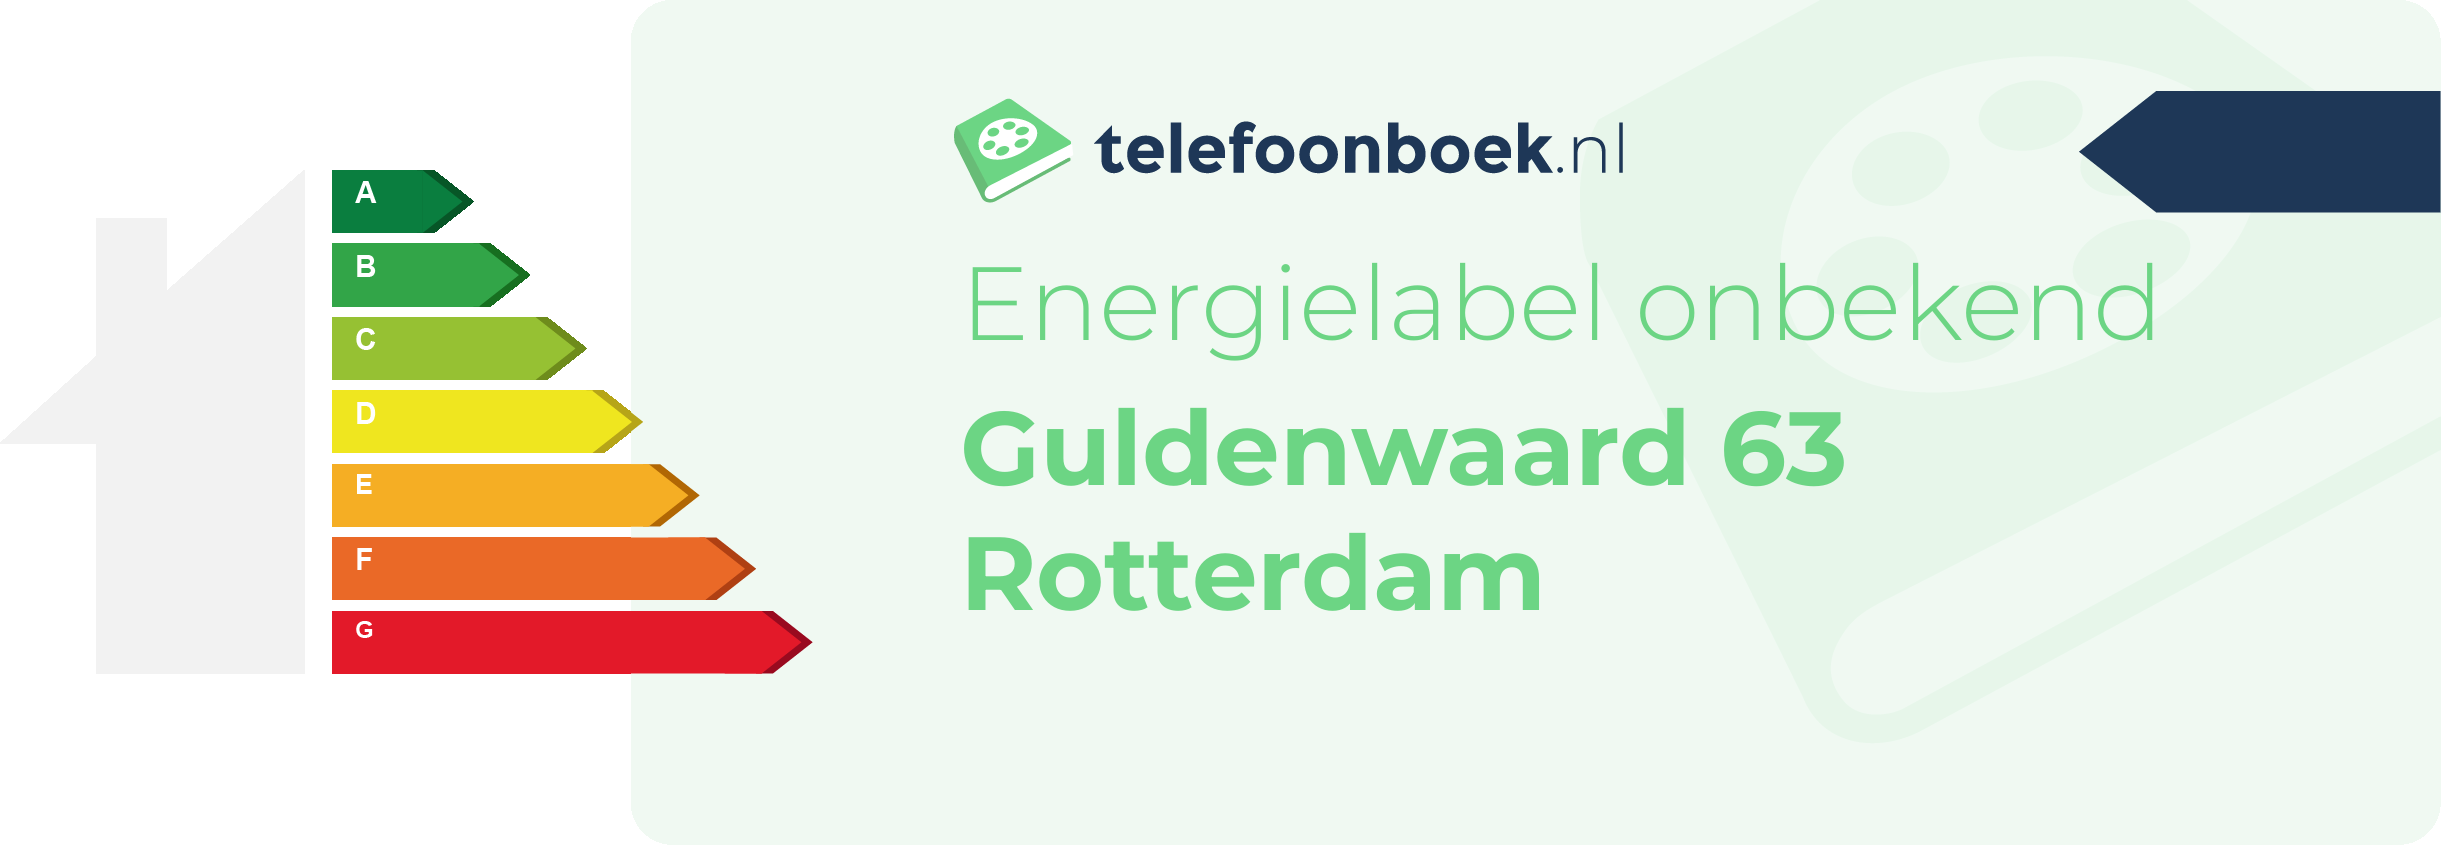 Energielabel Guldenwaard 63 Rotterdam